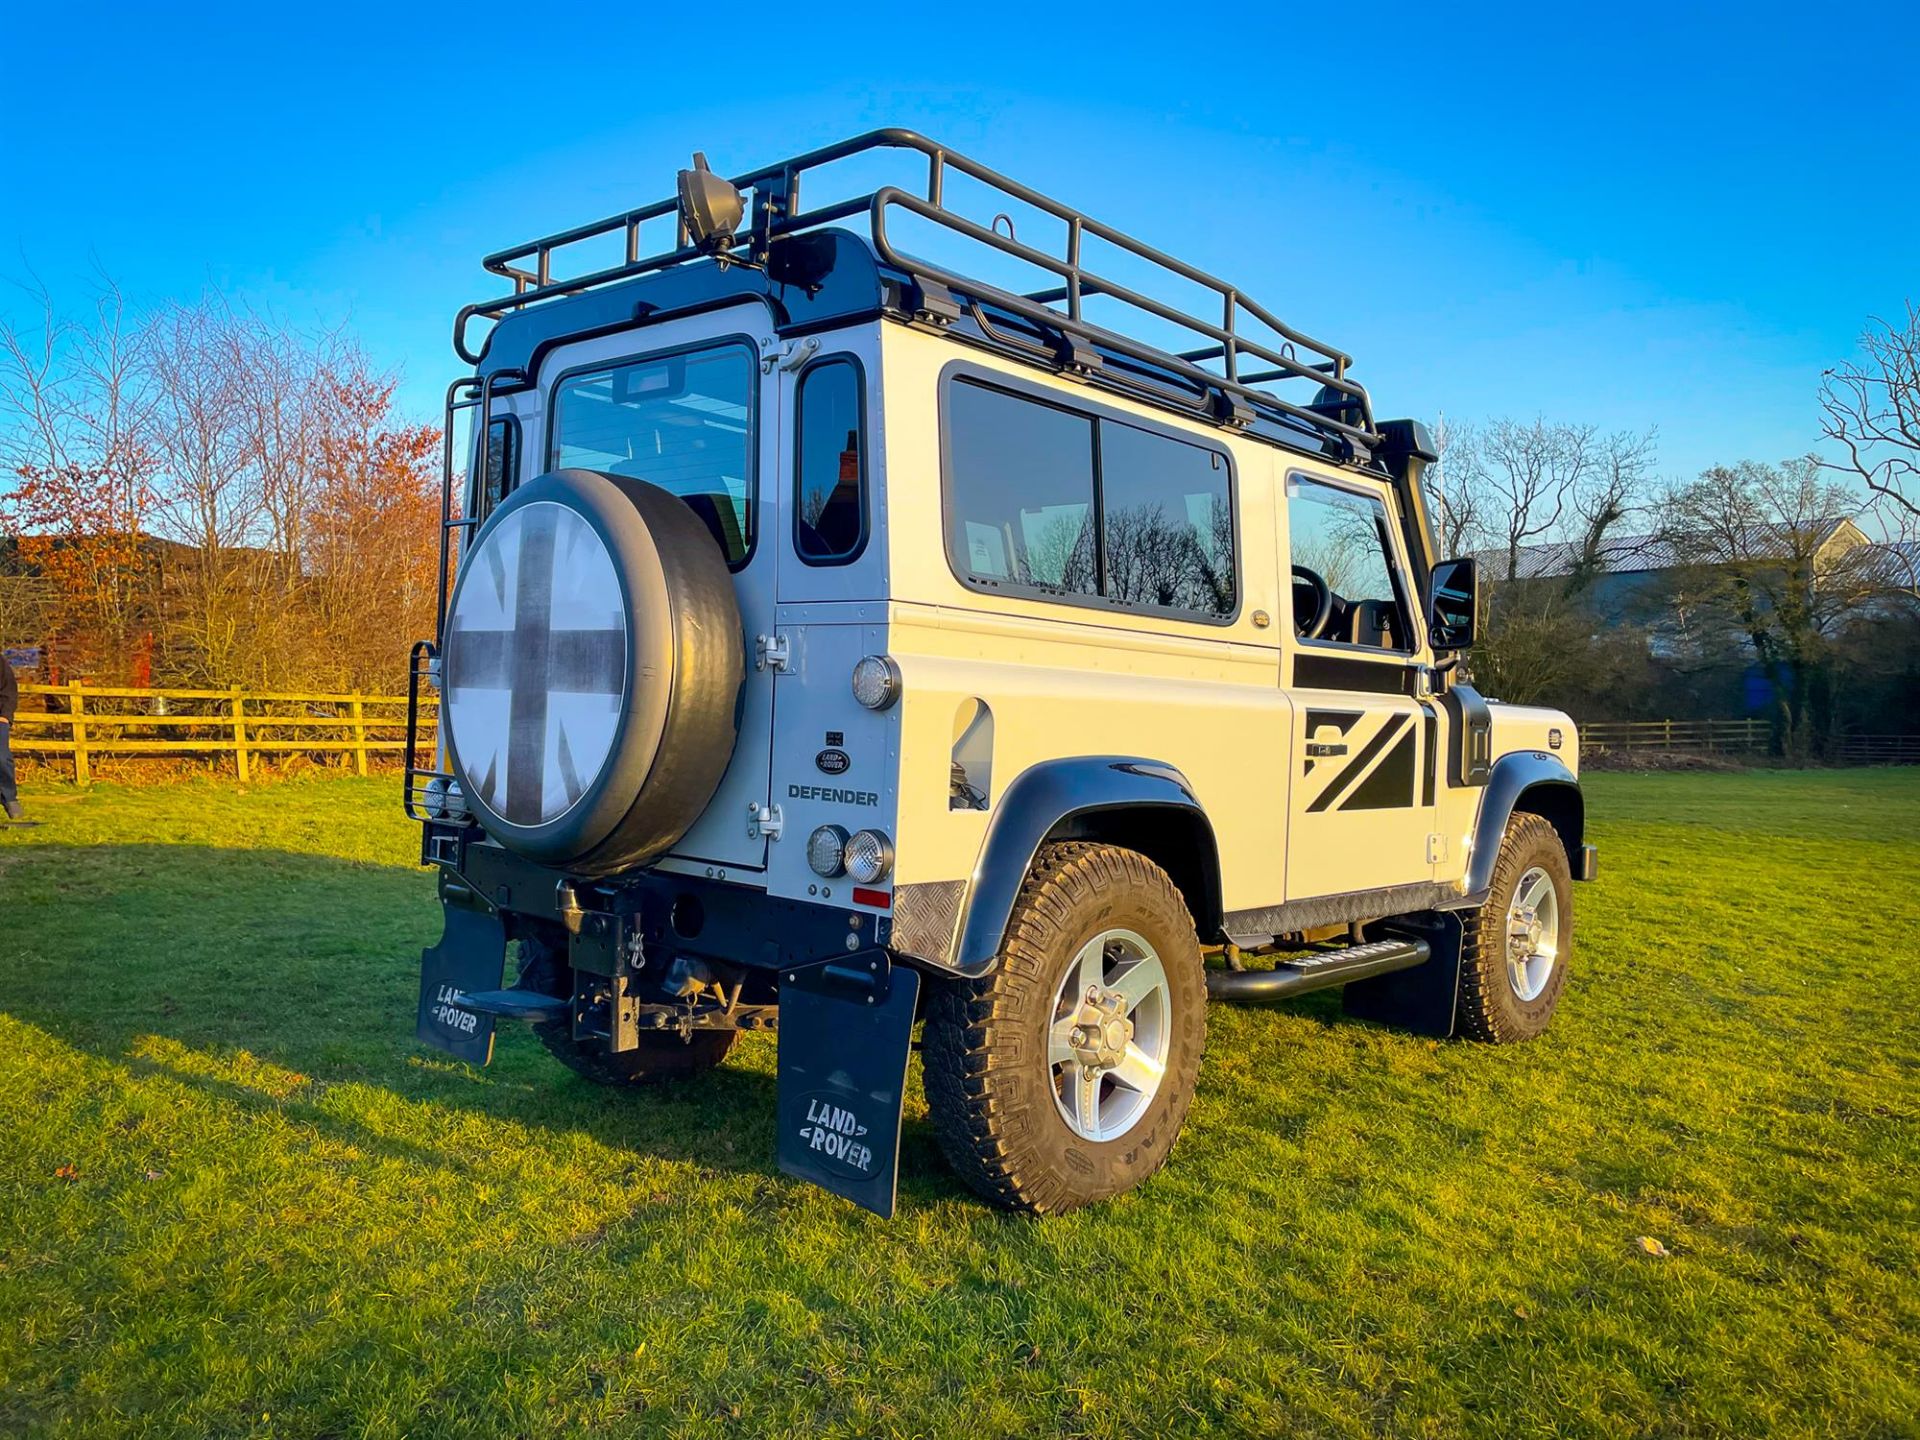 2015 Land Rover Defender 90 Landmark Edition - Image 7 of 10